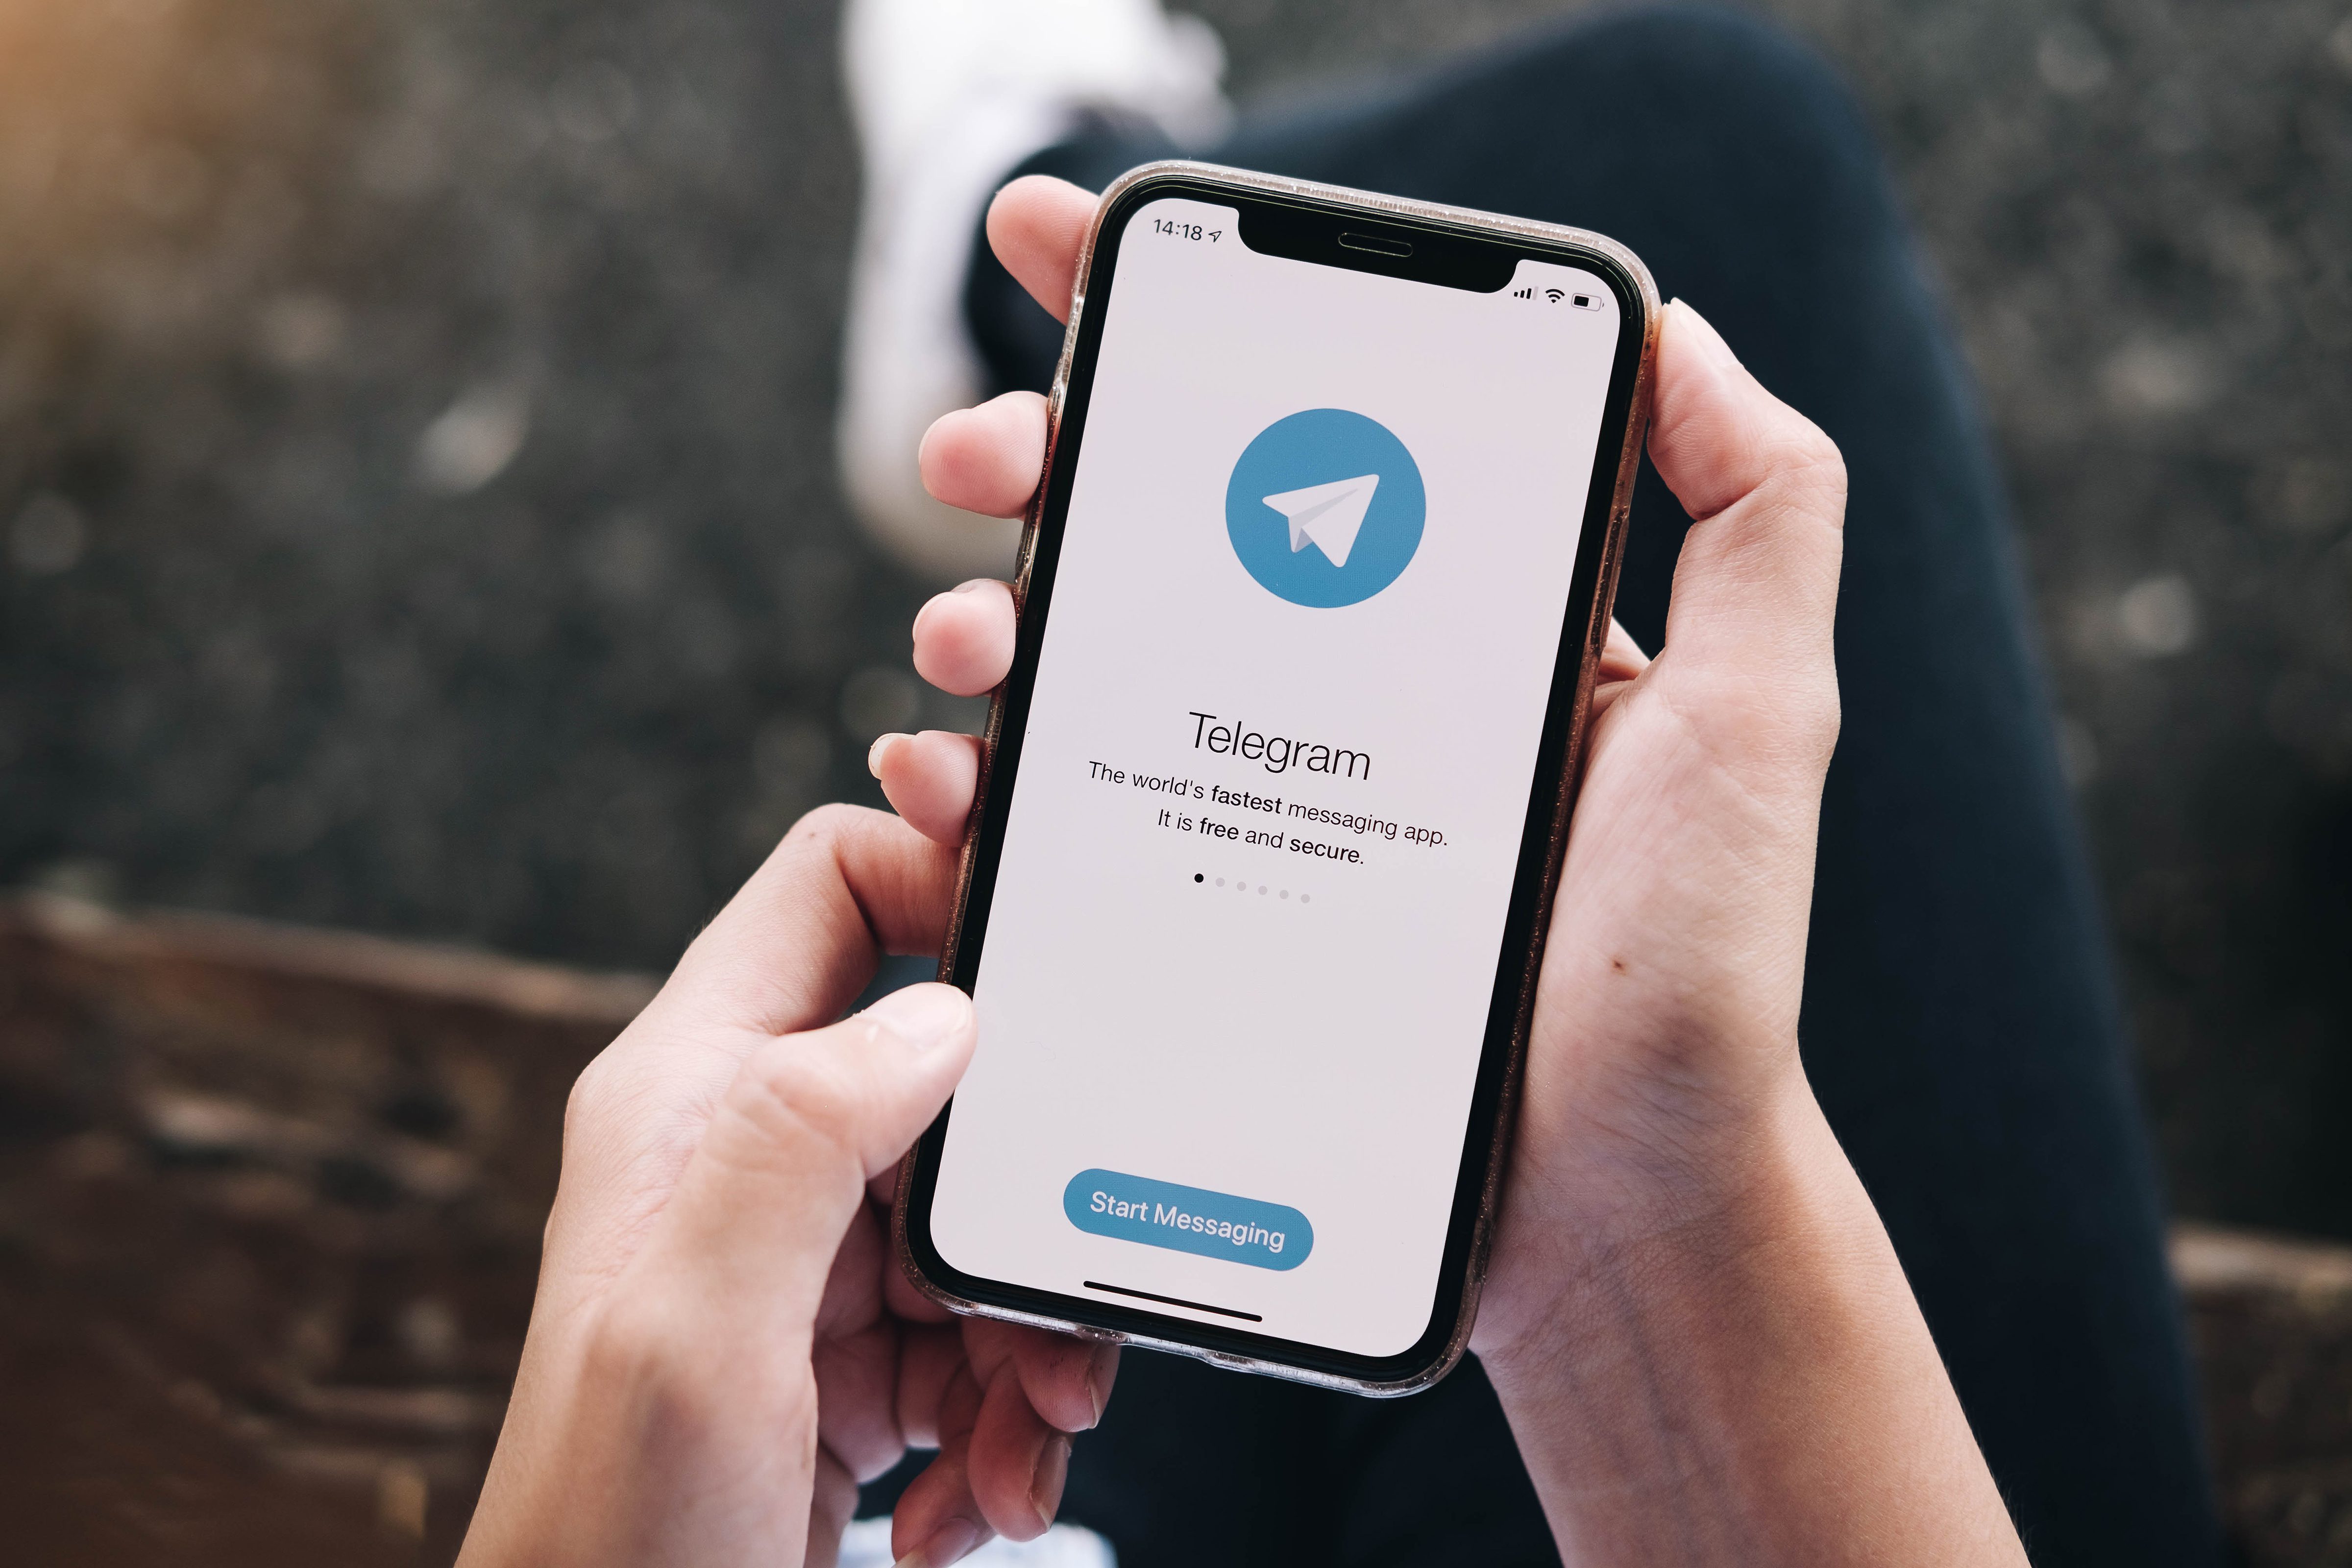 Phone showing Telegram app